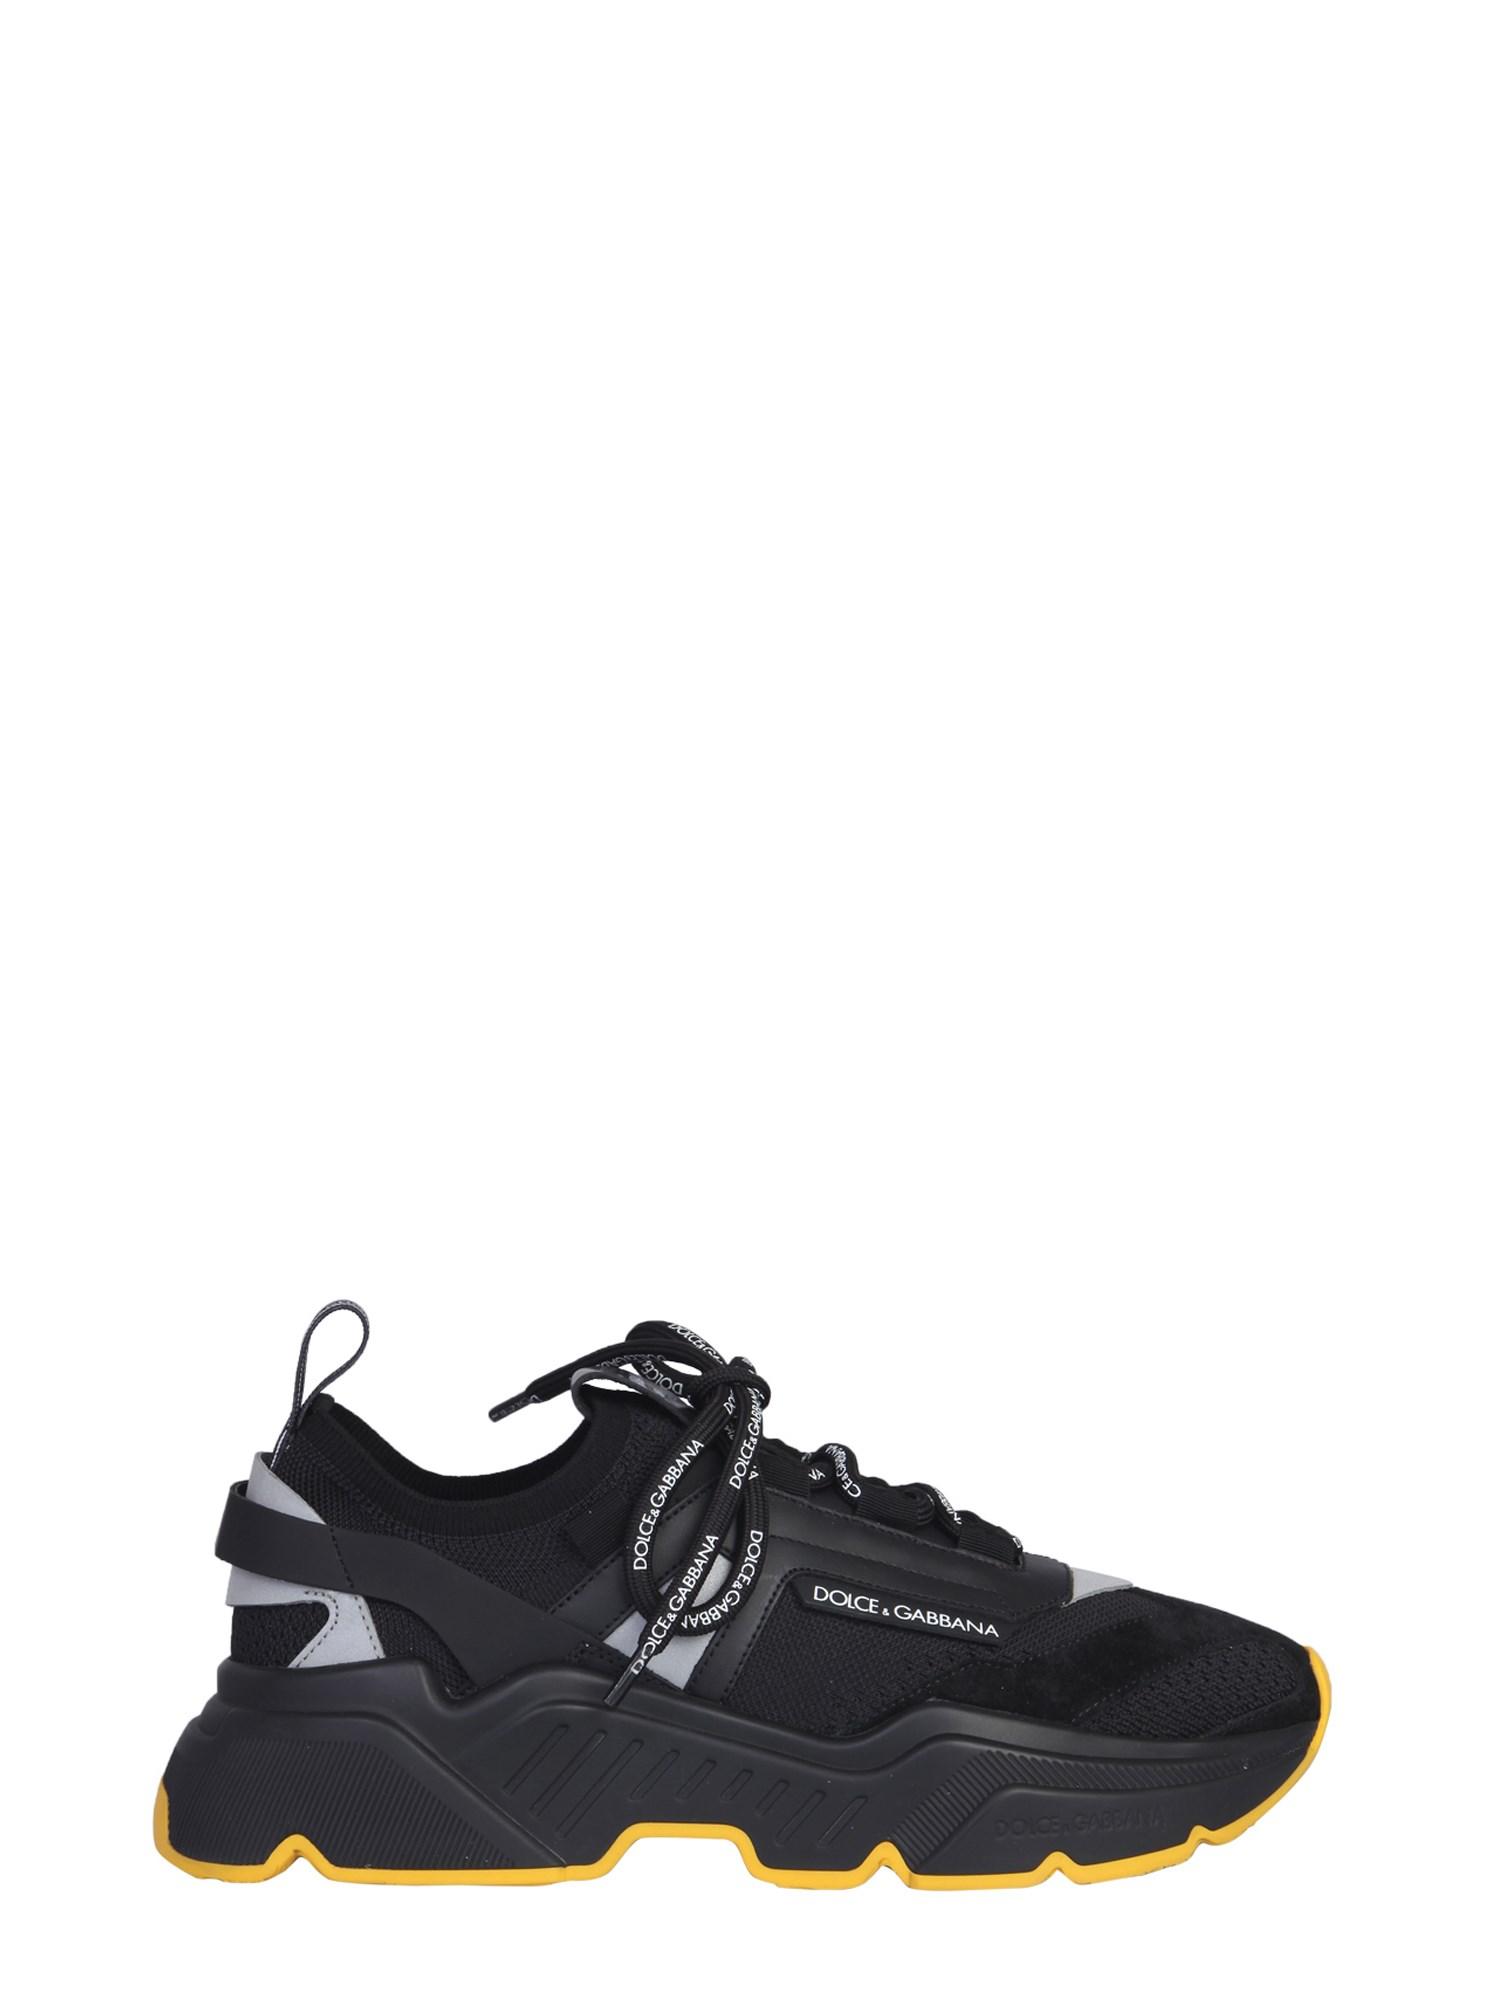 Dolce & Gabbana "day Master" Sneakers in Black for Men - Lyst